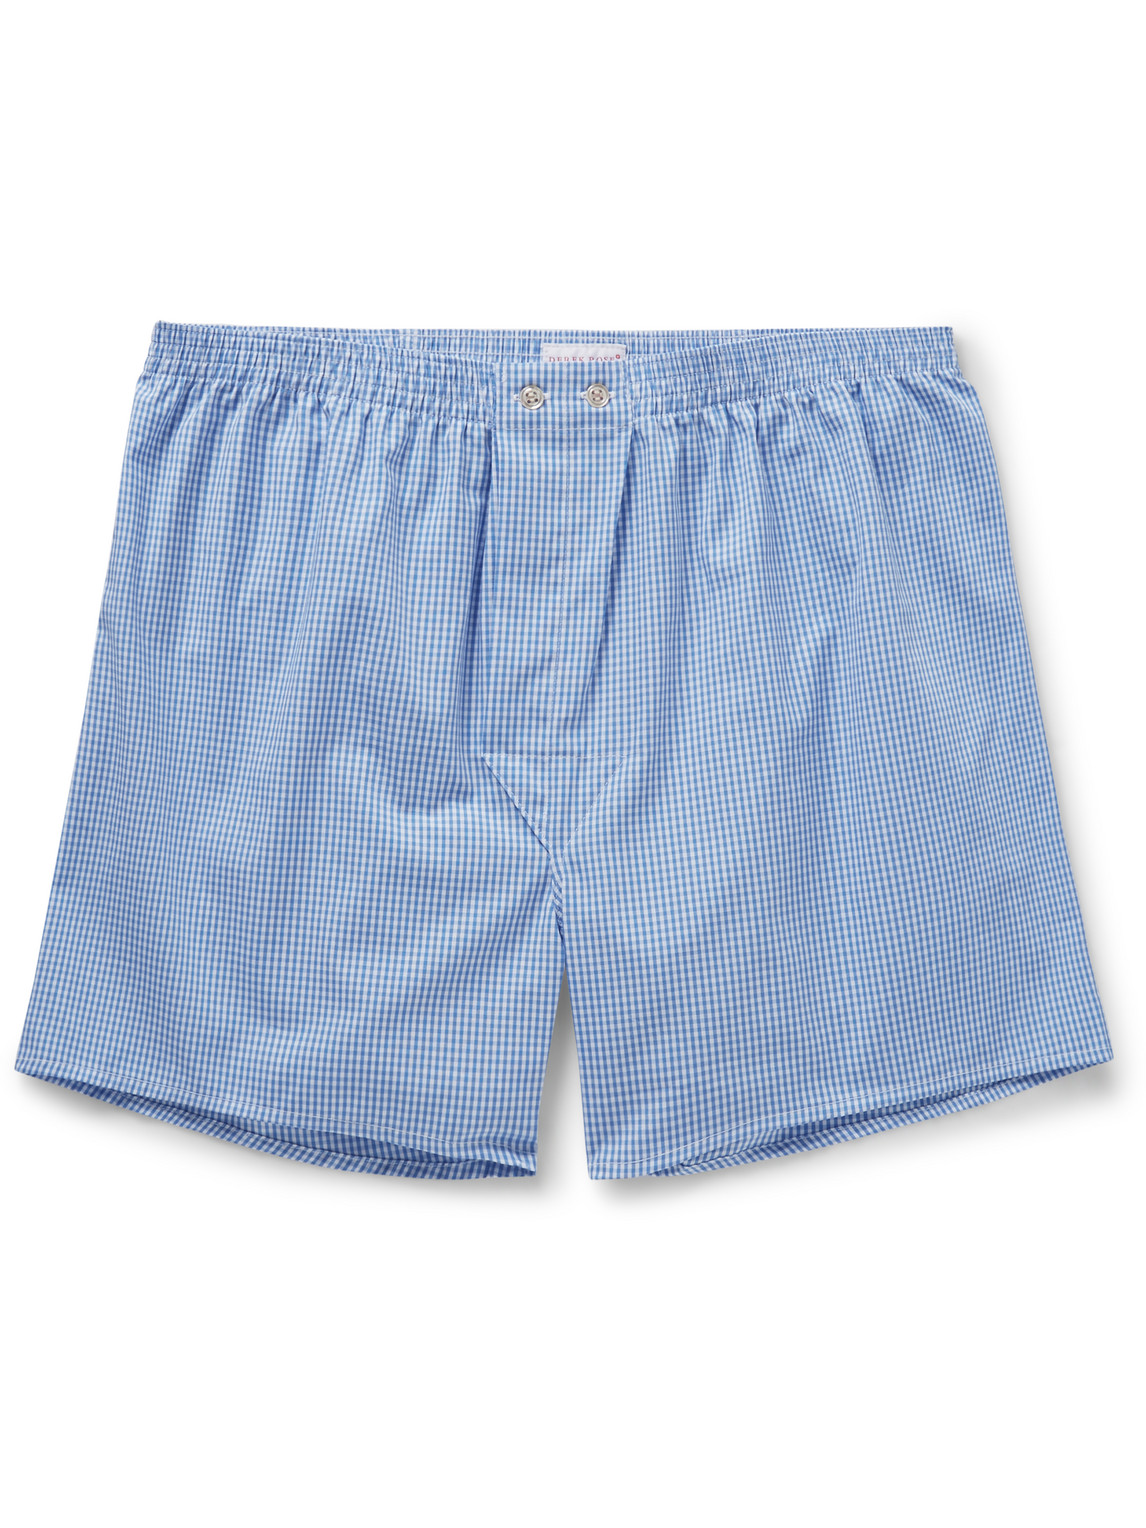 Derek Rose Gingham Cotton Boxer Shorts In Blue